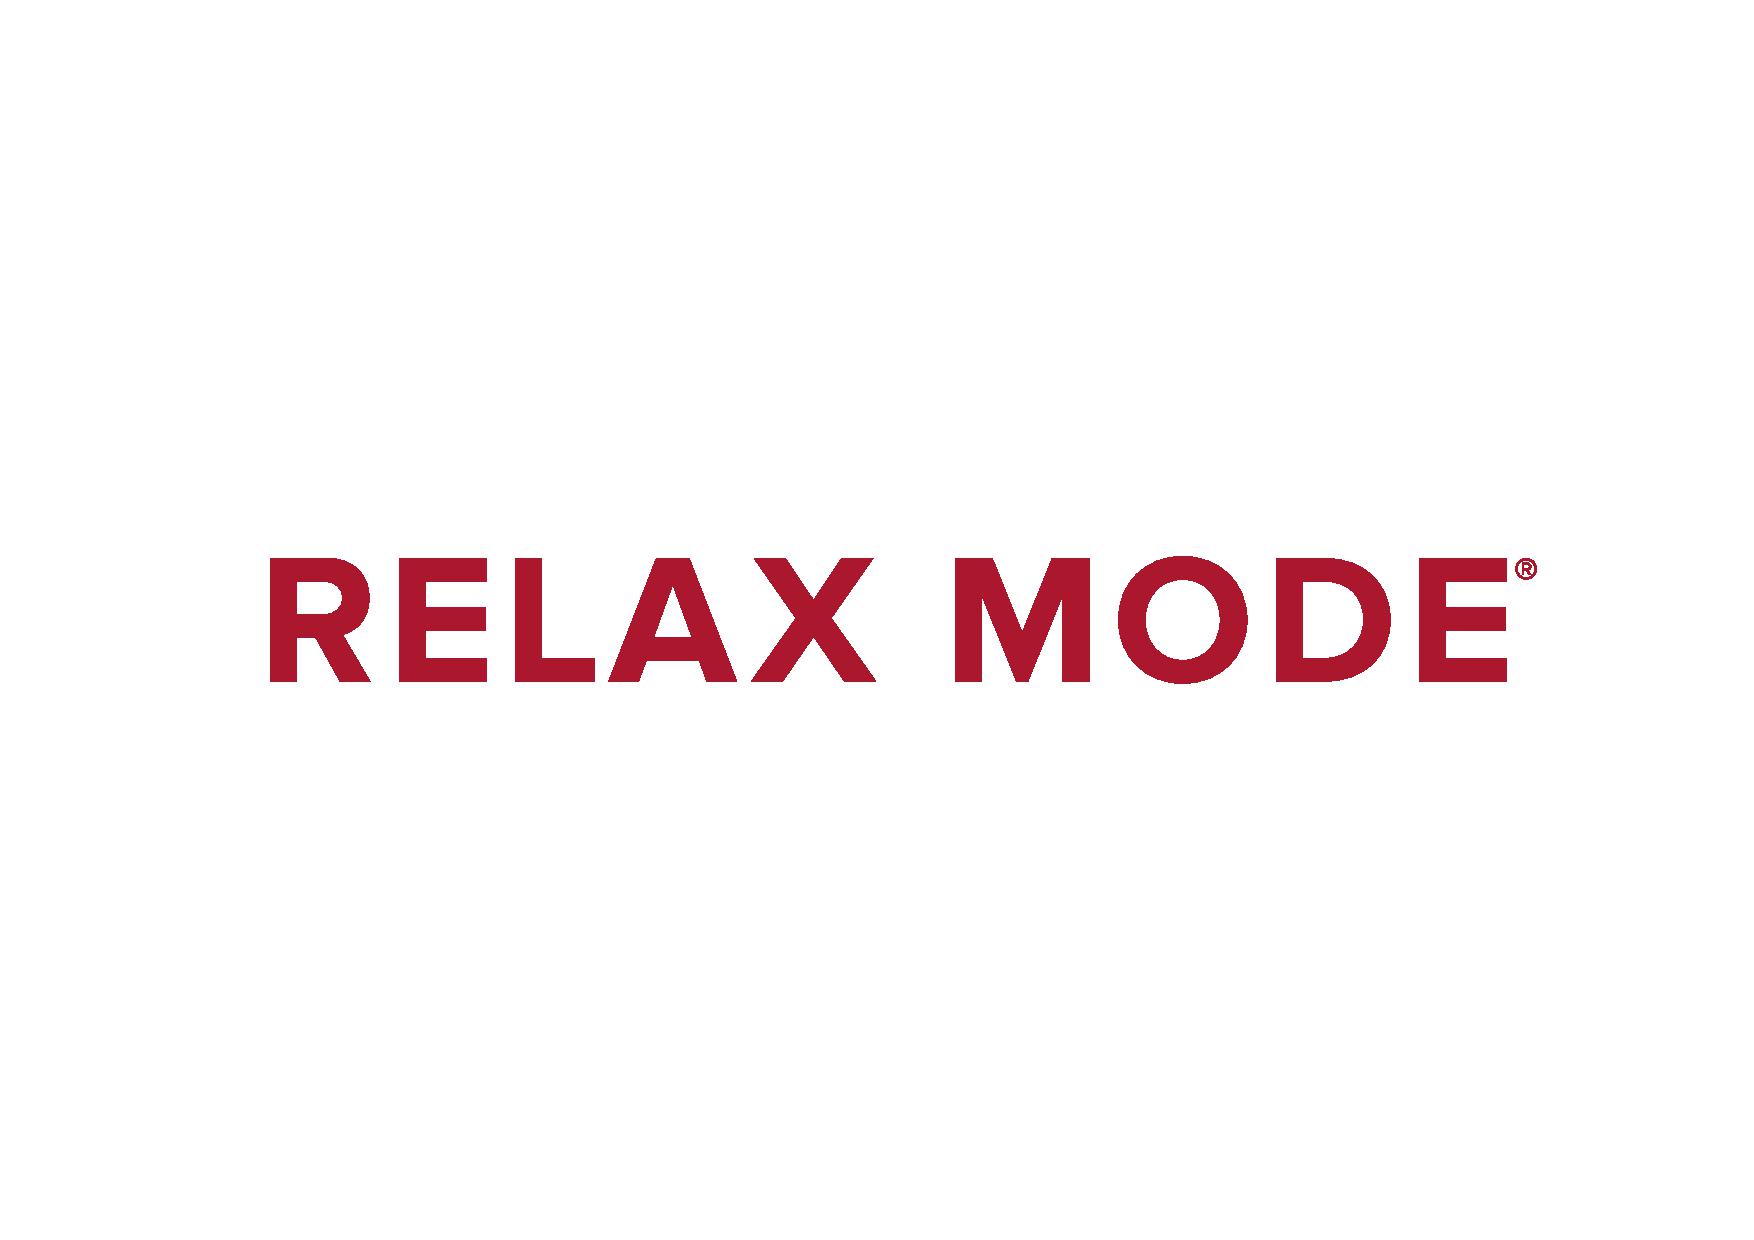 Relax mode